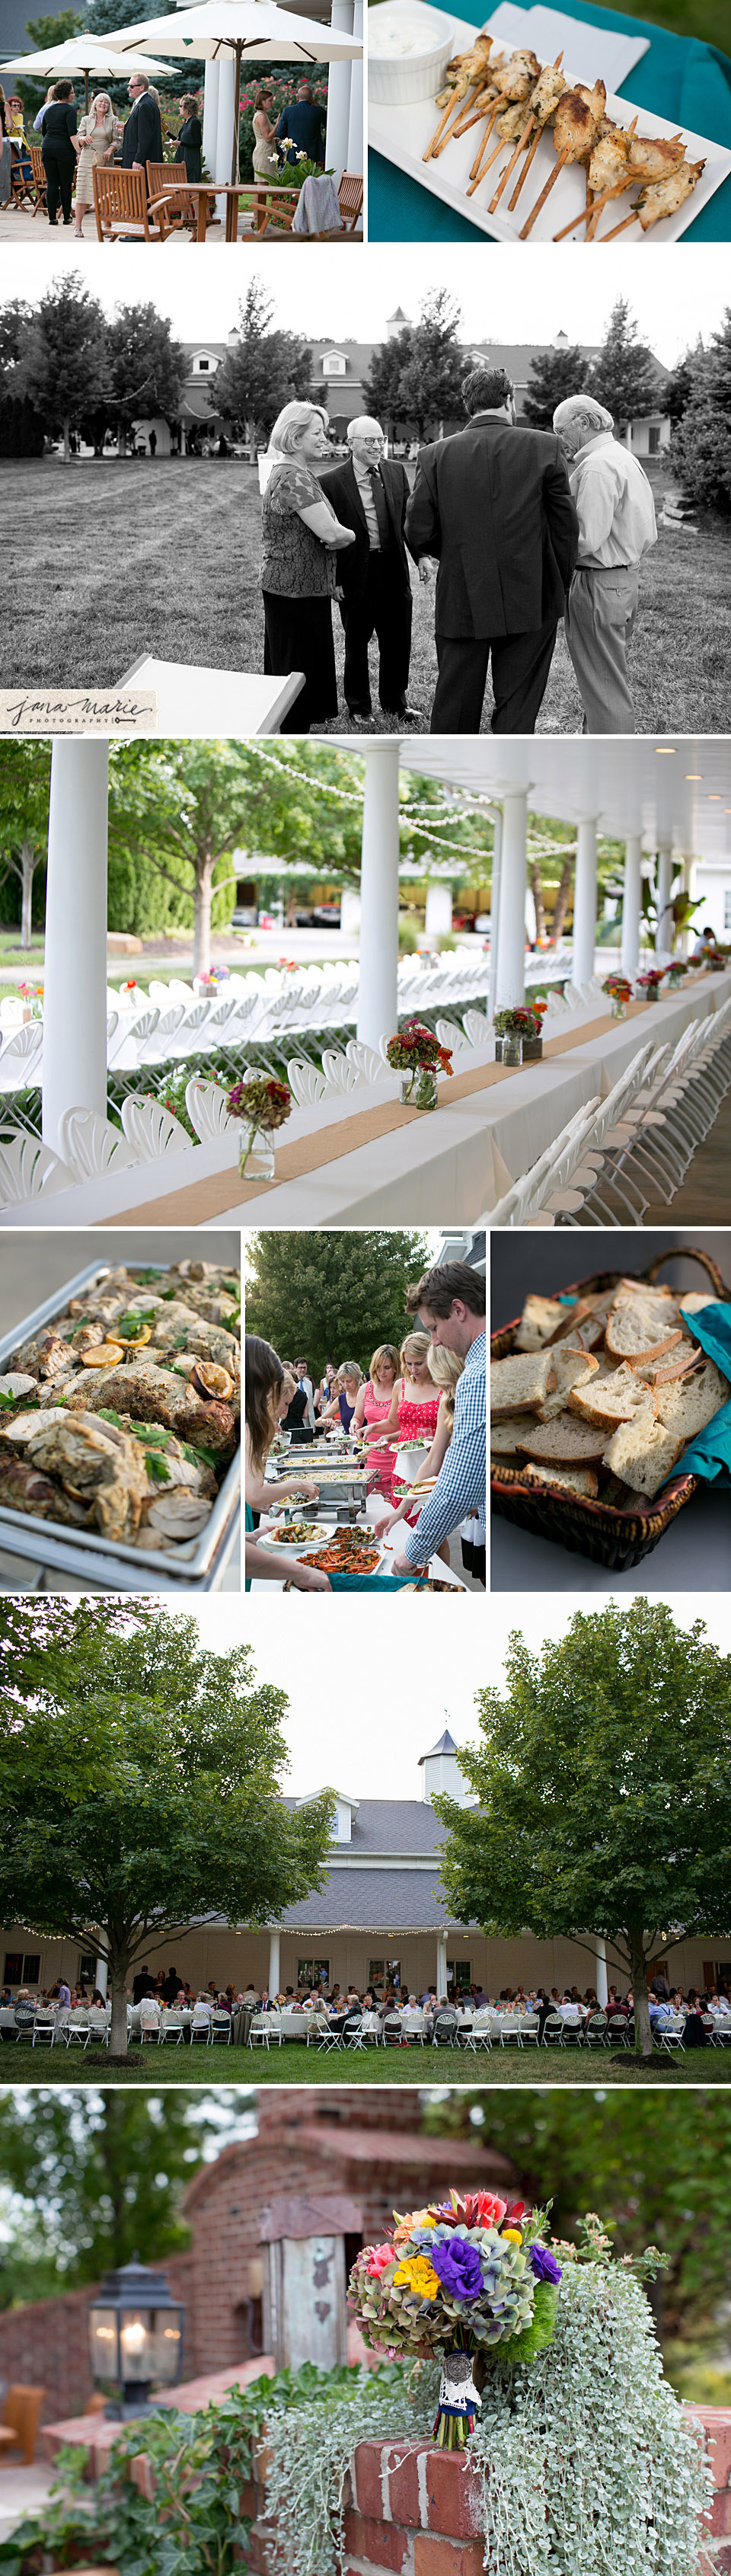 Kansas City weddings, catering companies, The Phantasties, Janay A Handmade, Red Door Event & Design